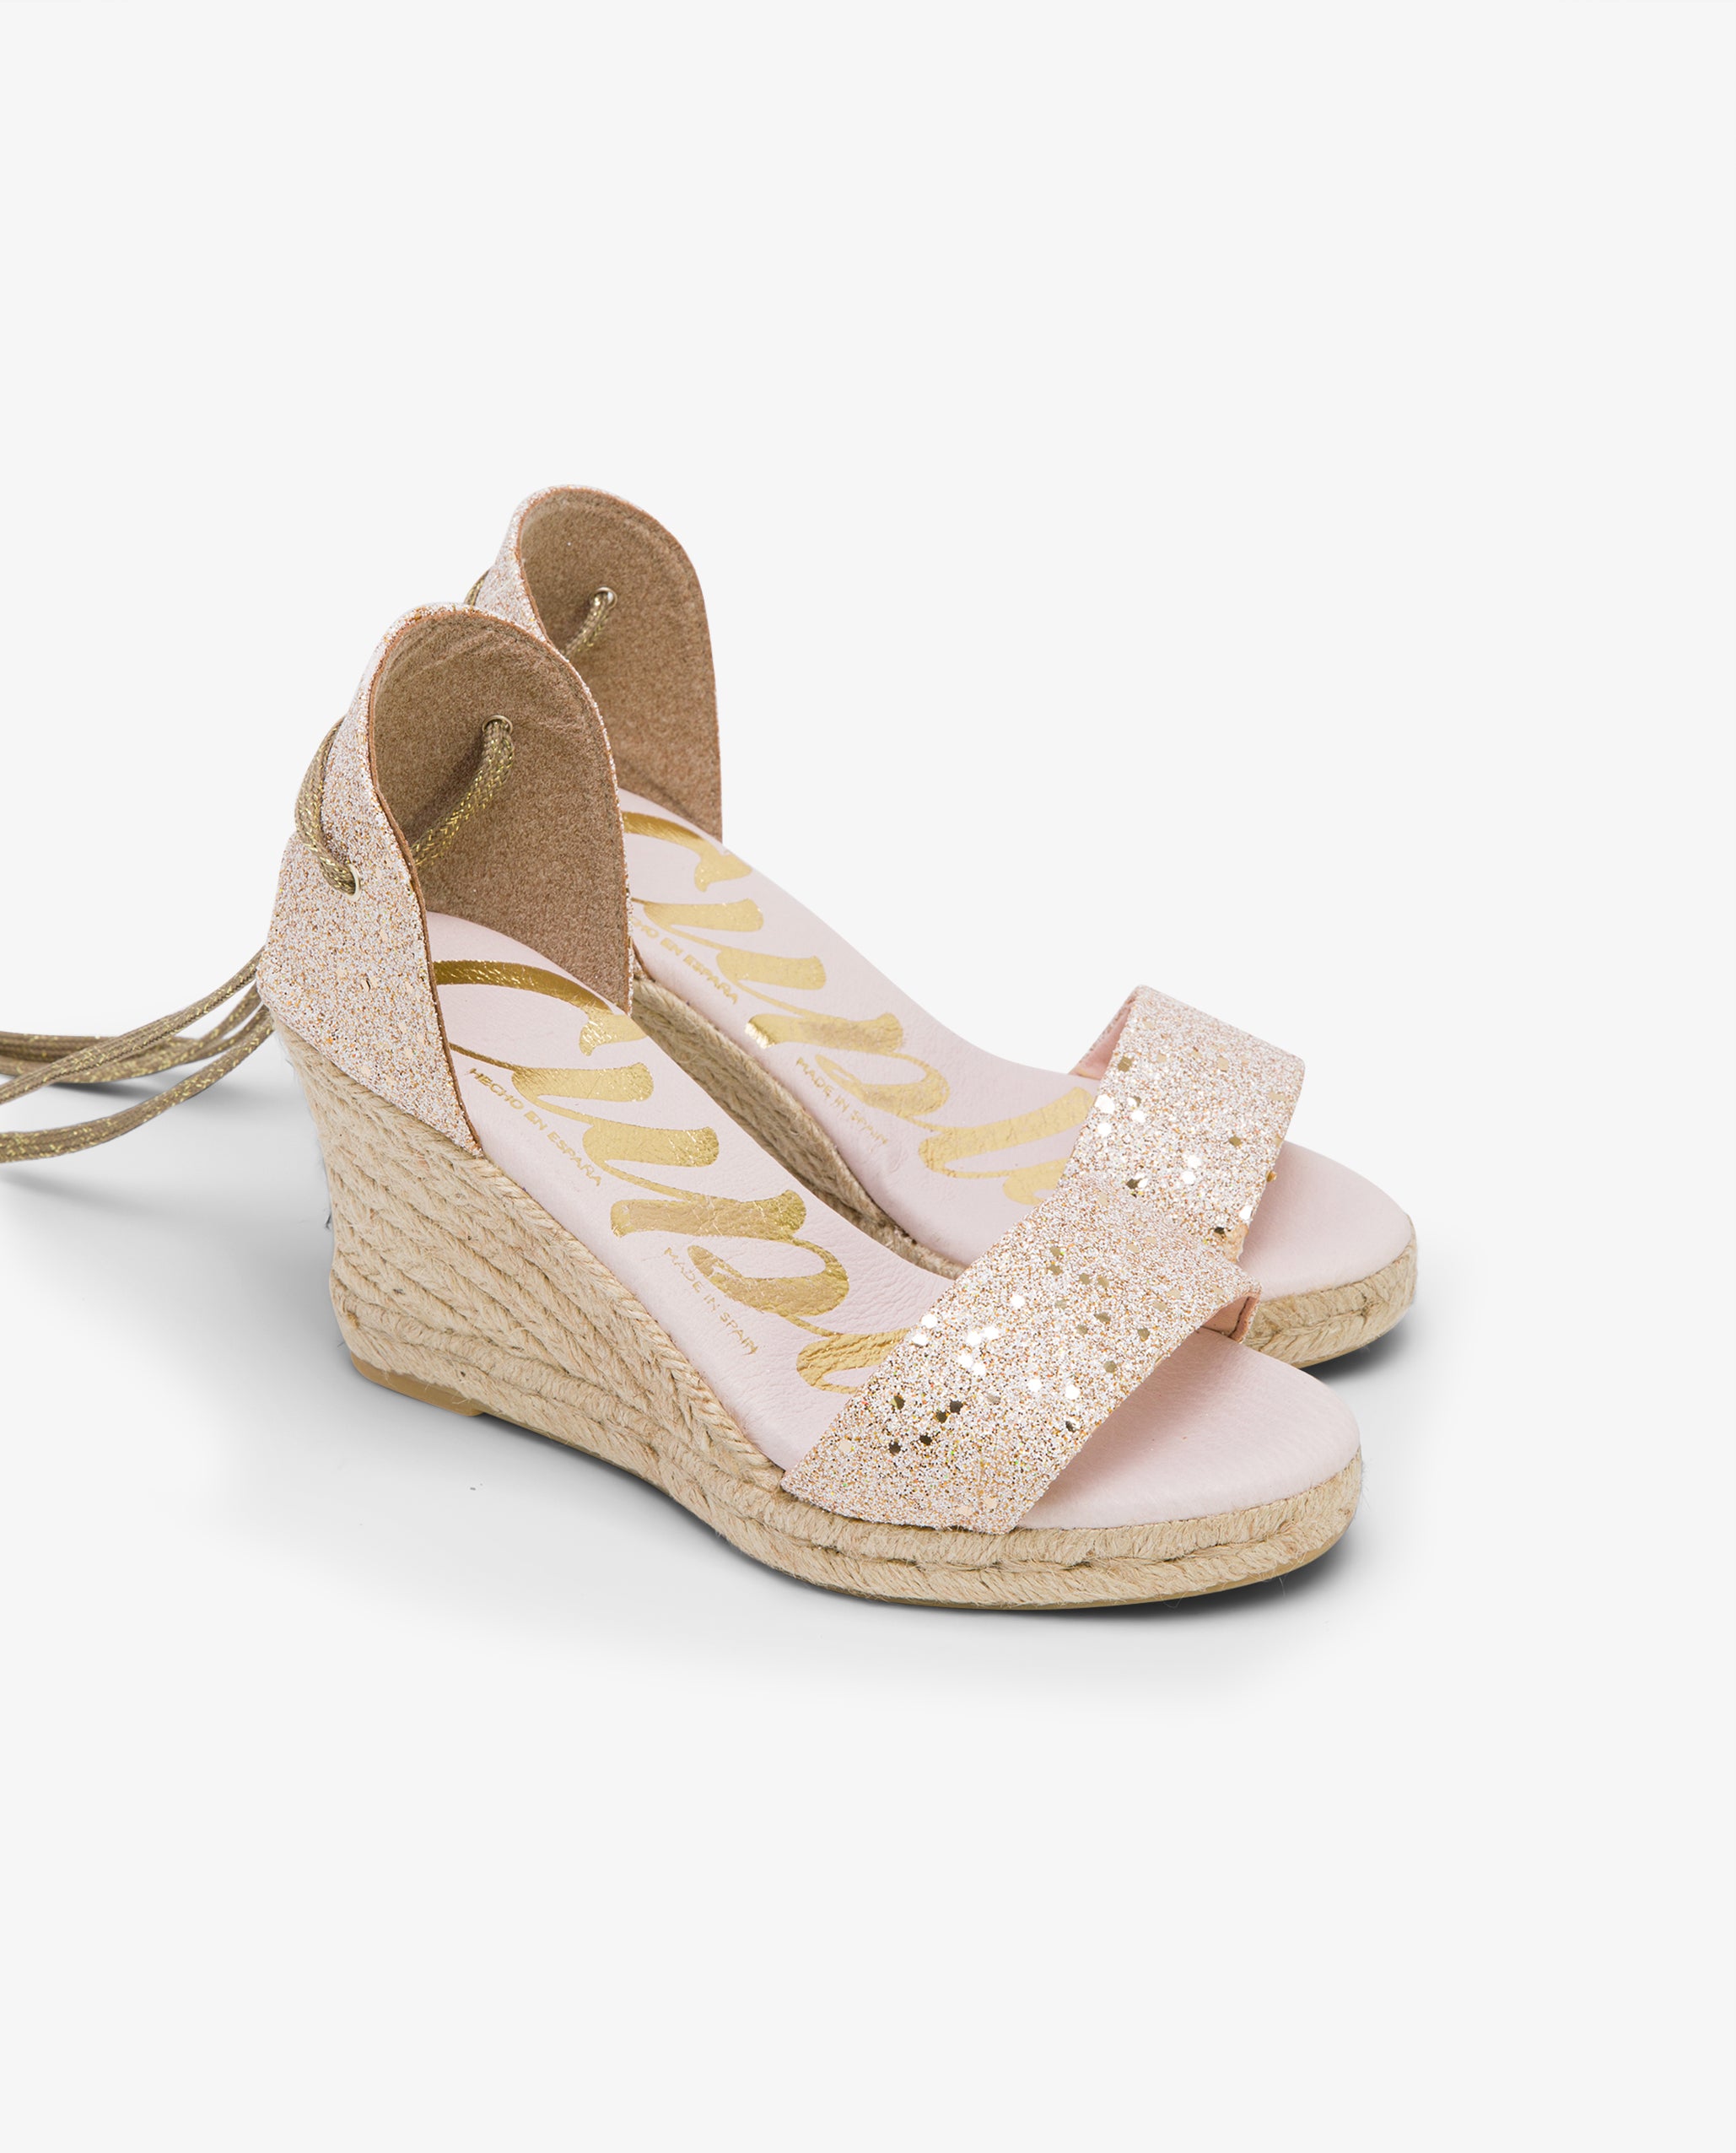 NUR ITALY CUPLE Manuela Glitter Wedge Sandal, Lace-up ankle, color, ROSE GOLD